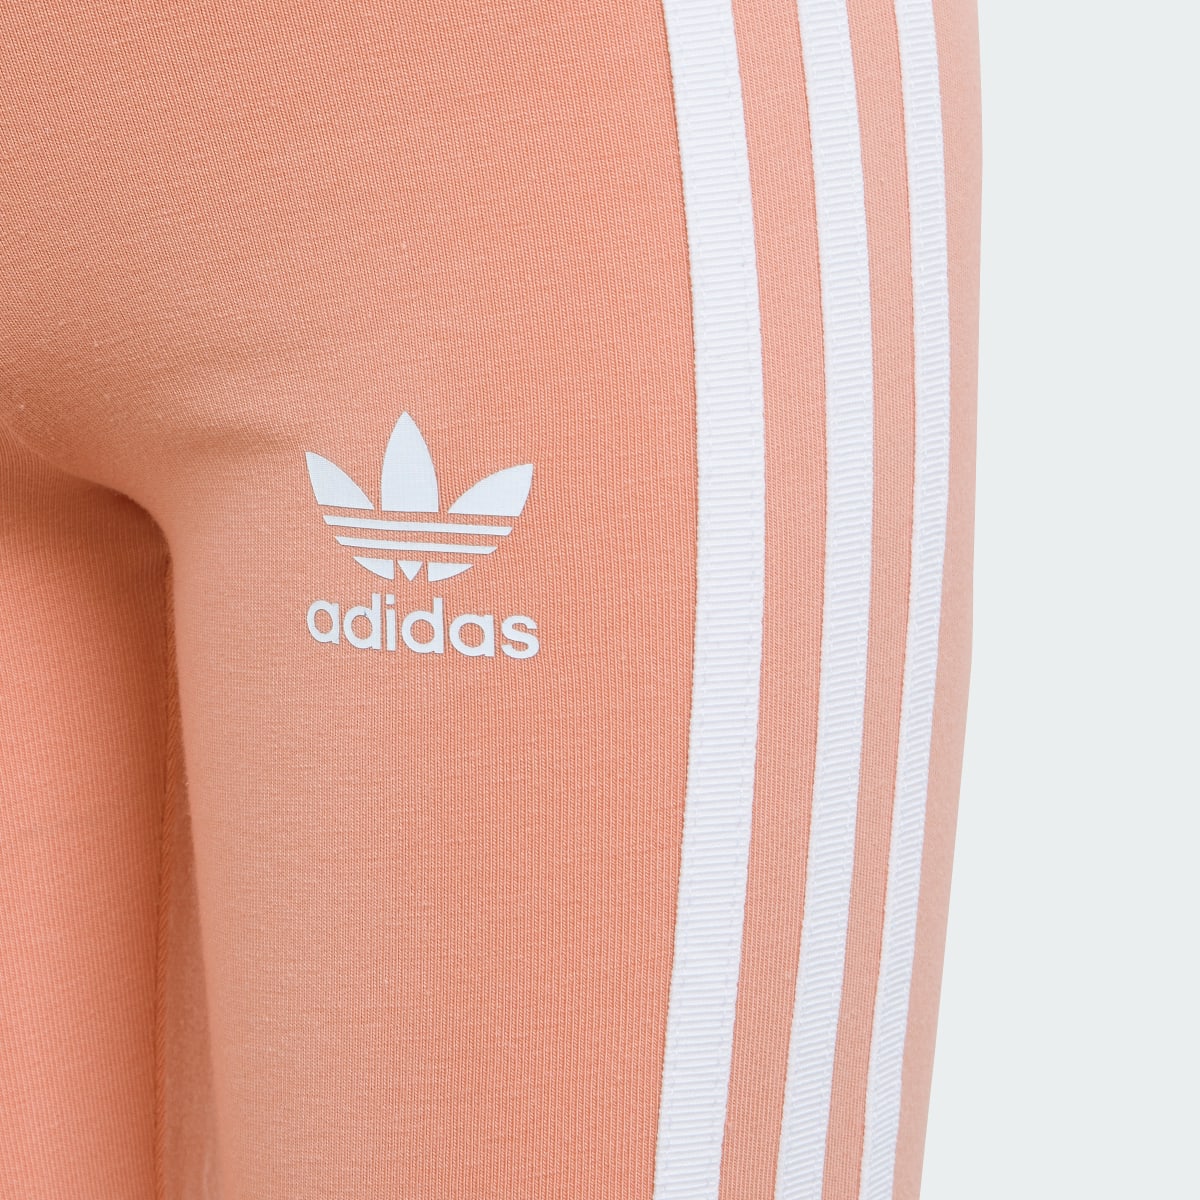 Adidas Animal Allover Print Sweatshirt und Leggings Set. 9